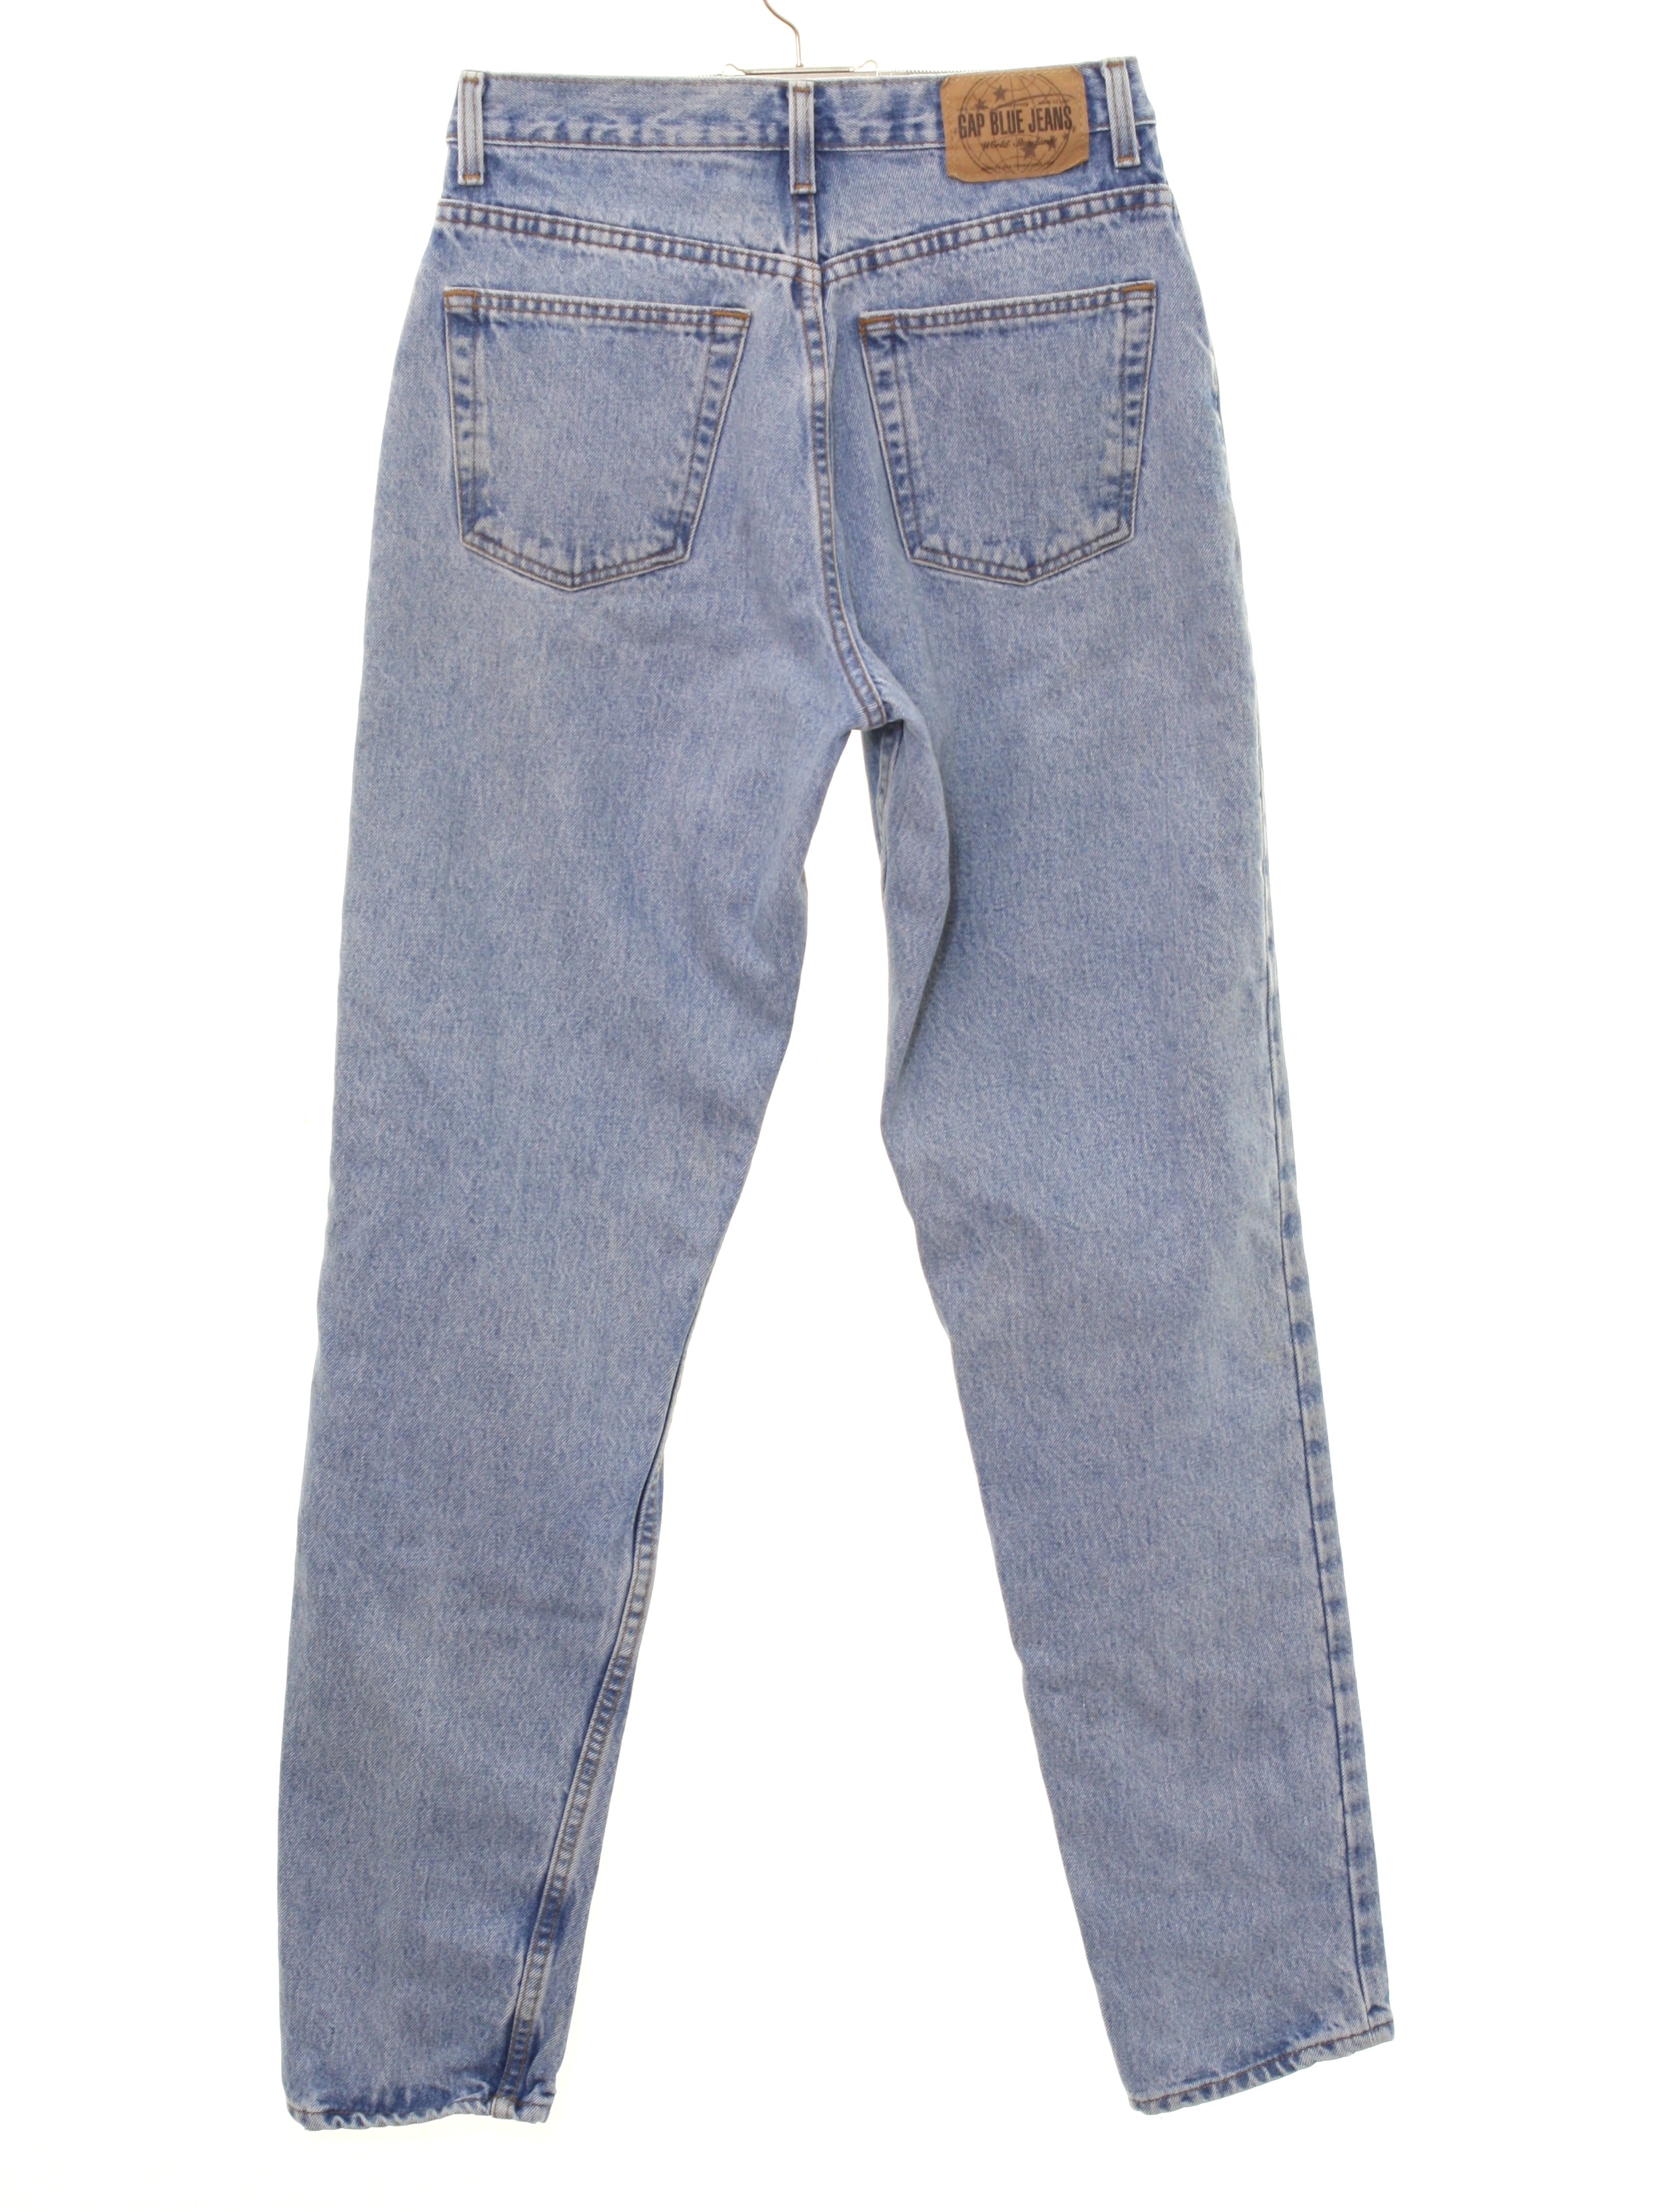 Gap Blue Jeans 90's Vintage Pants: 90s -Gap Blue Jeans- Womens faded ...